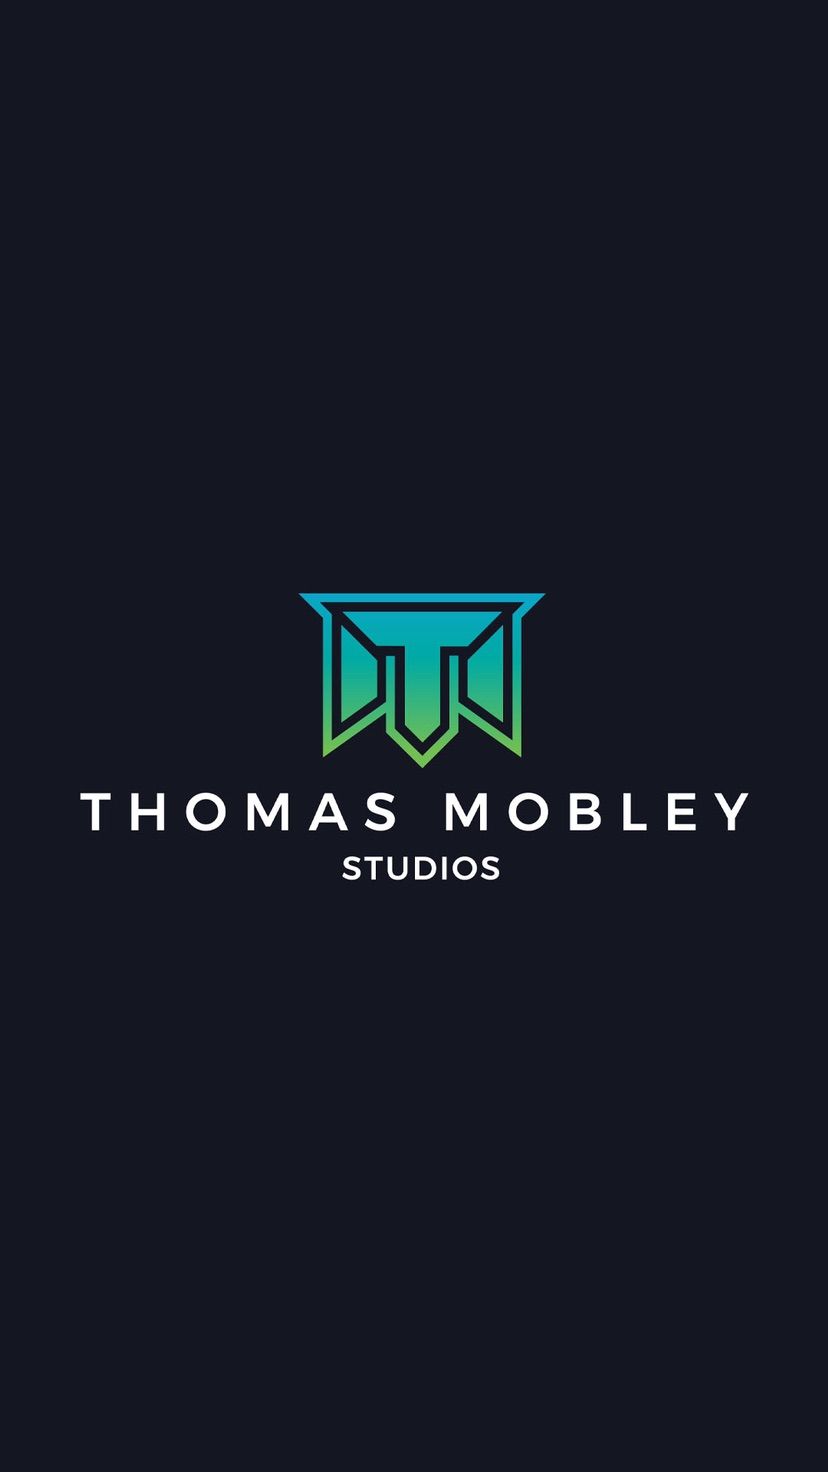 Thomas Mobley Studios